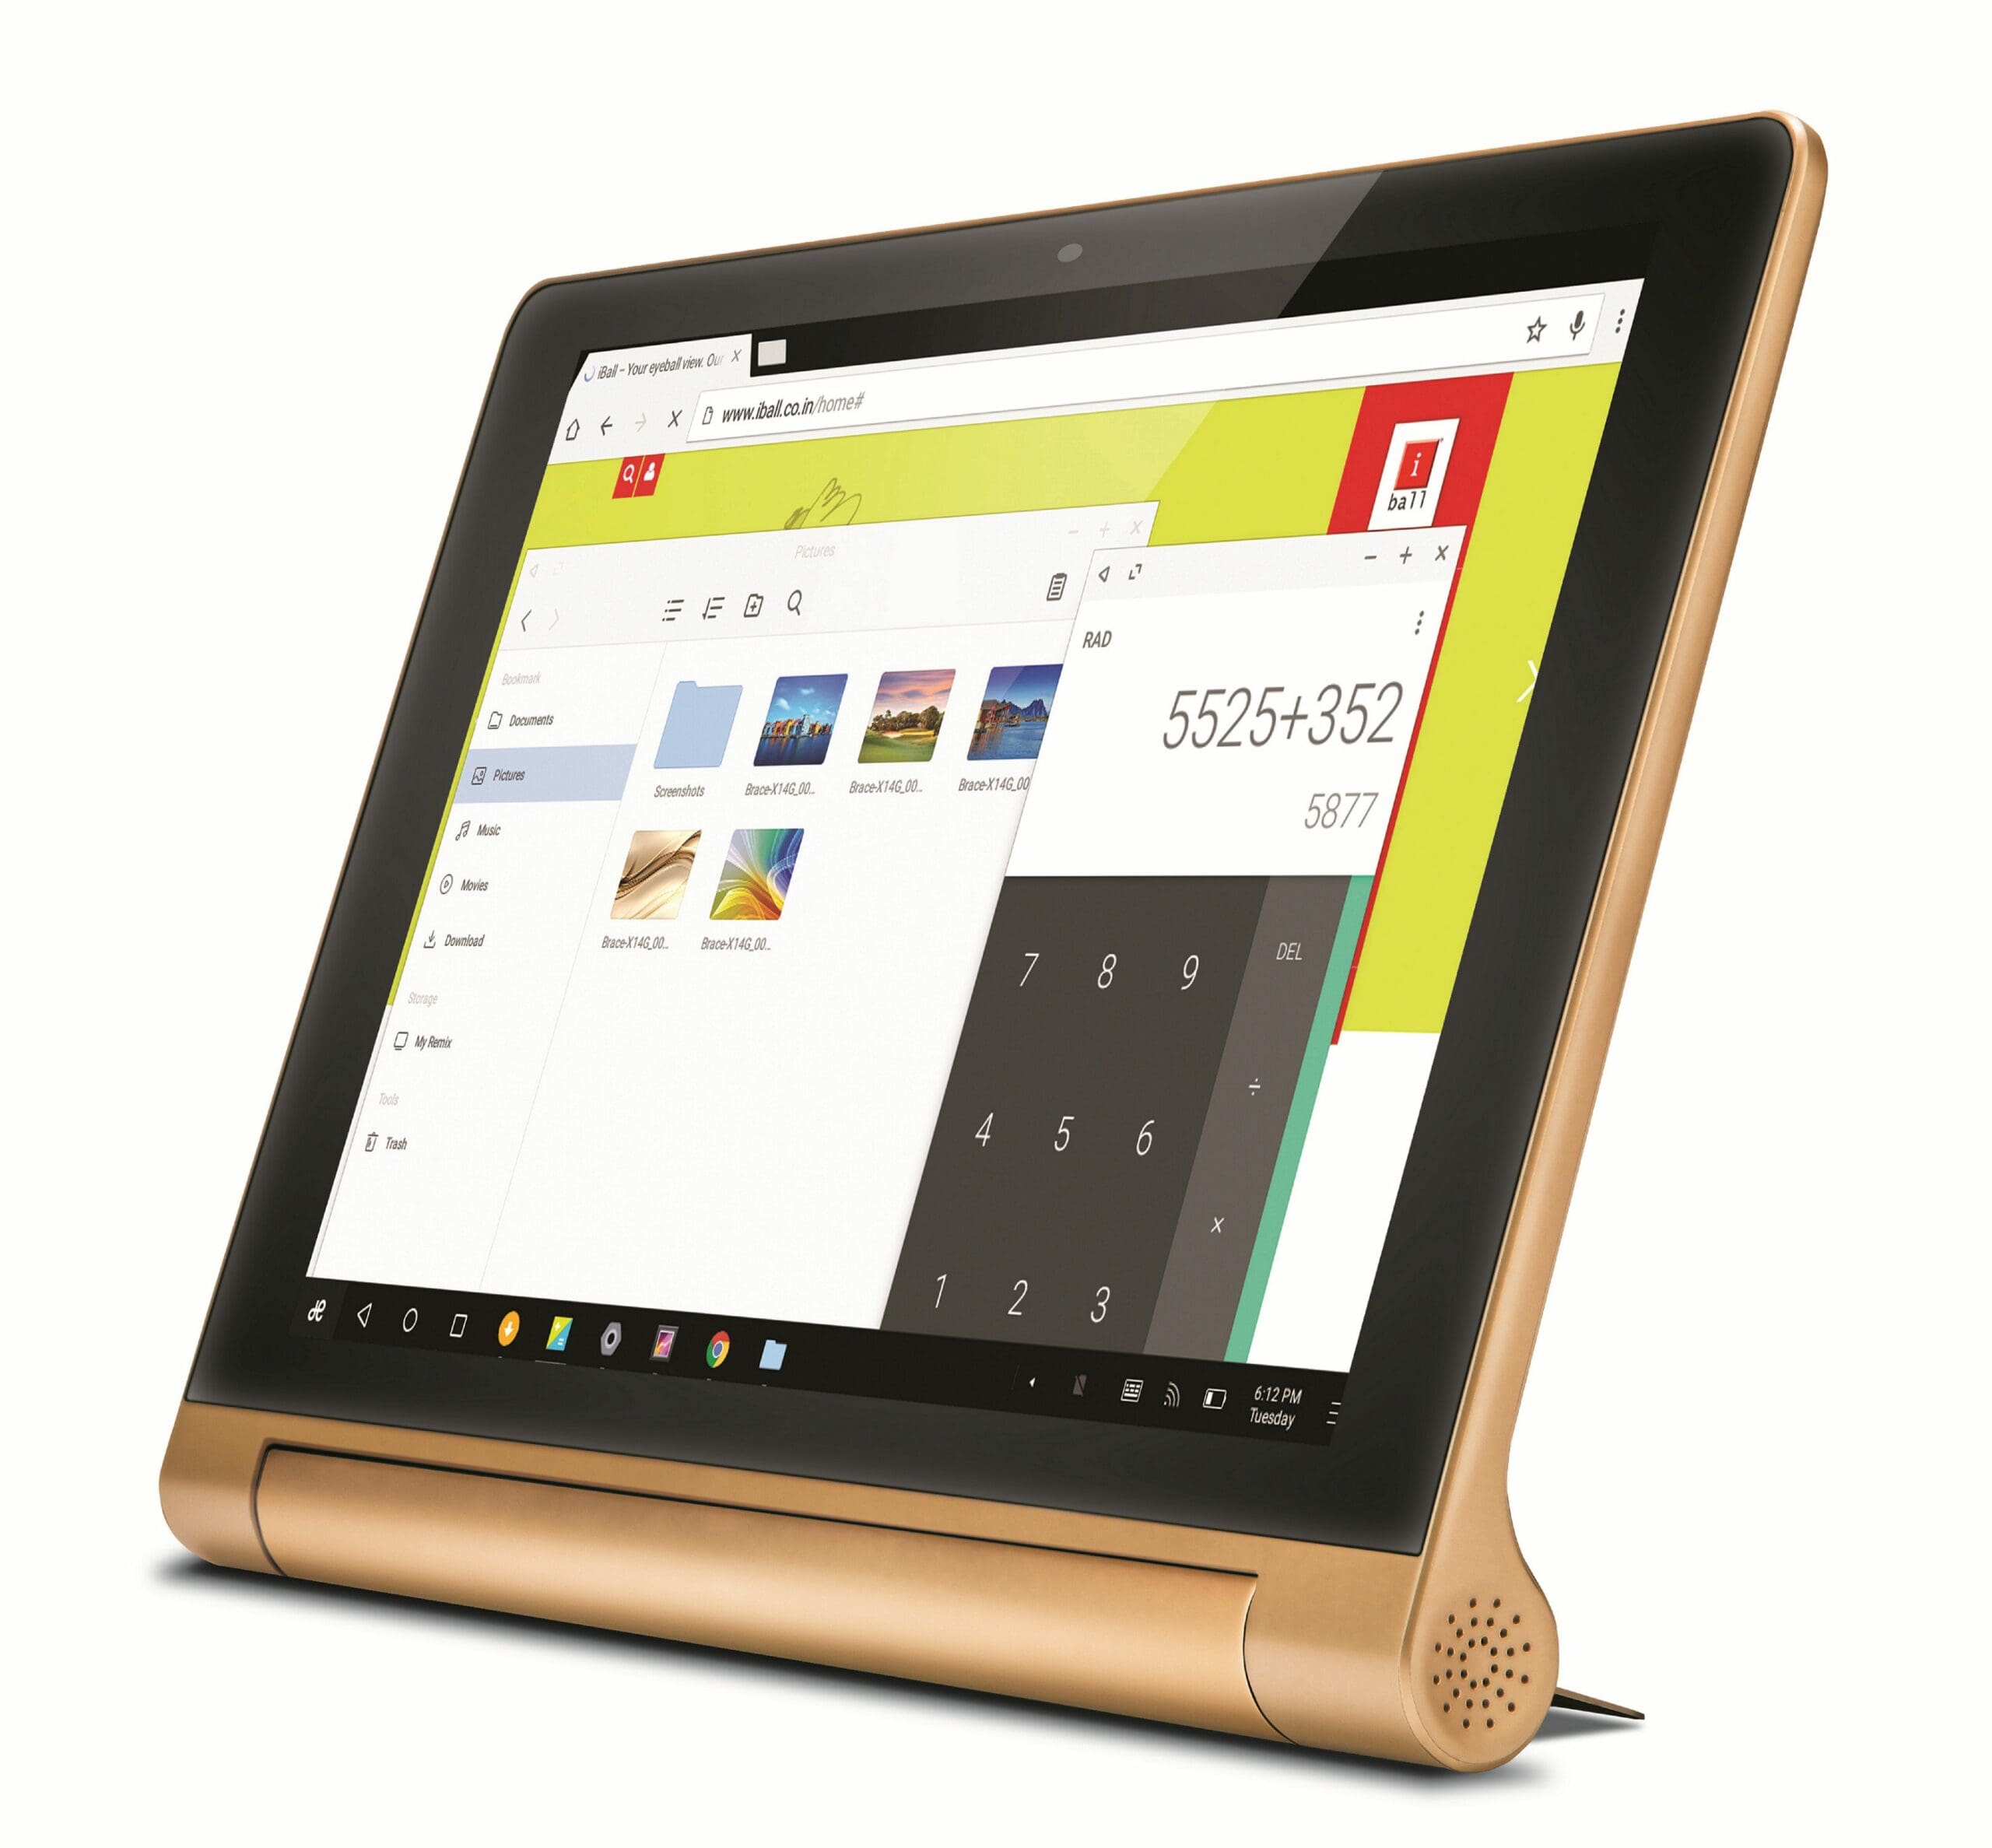 Os на планшет. Лаунч планшет. Планшет слайдер Microsoft. Tablet os. X1 Tablet цены в Ташкенте.